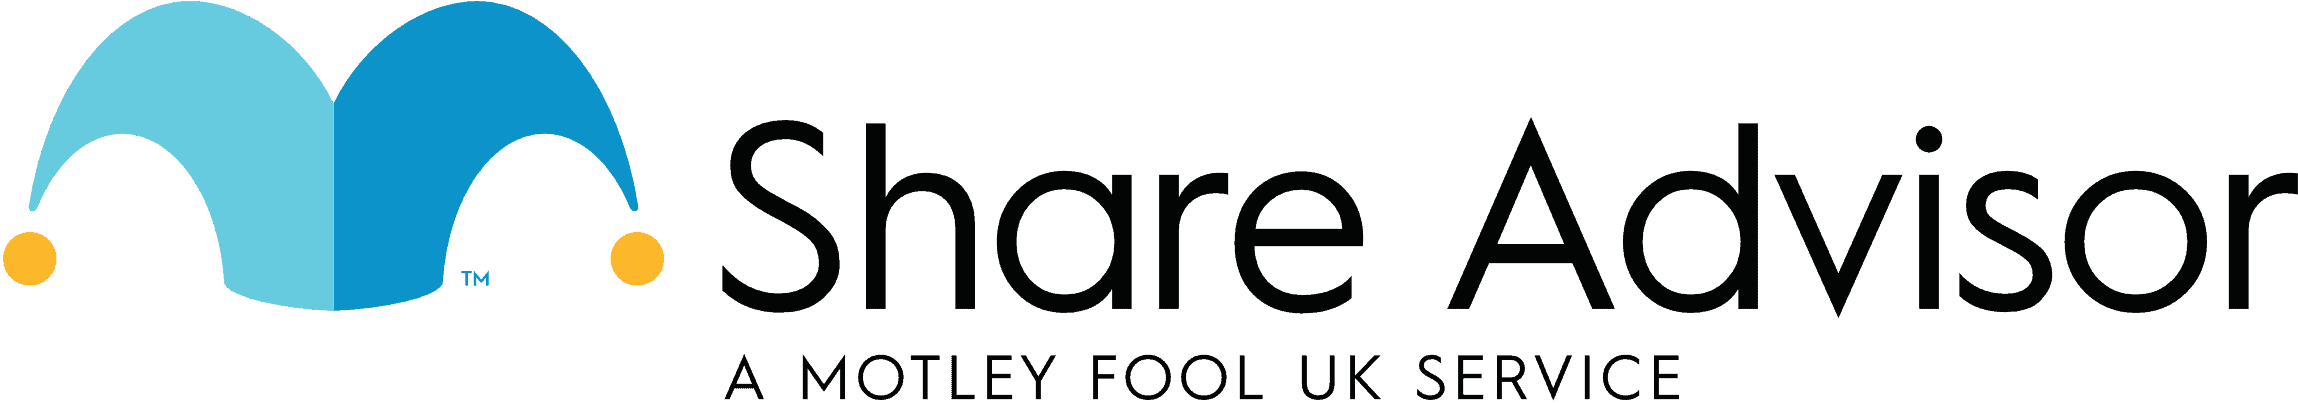 Share Advisor - A Motley Fool UK Service